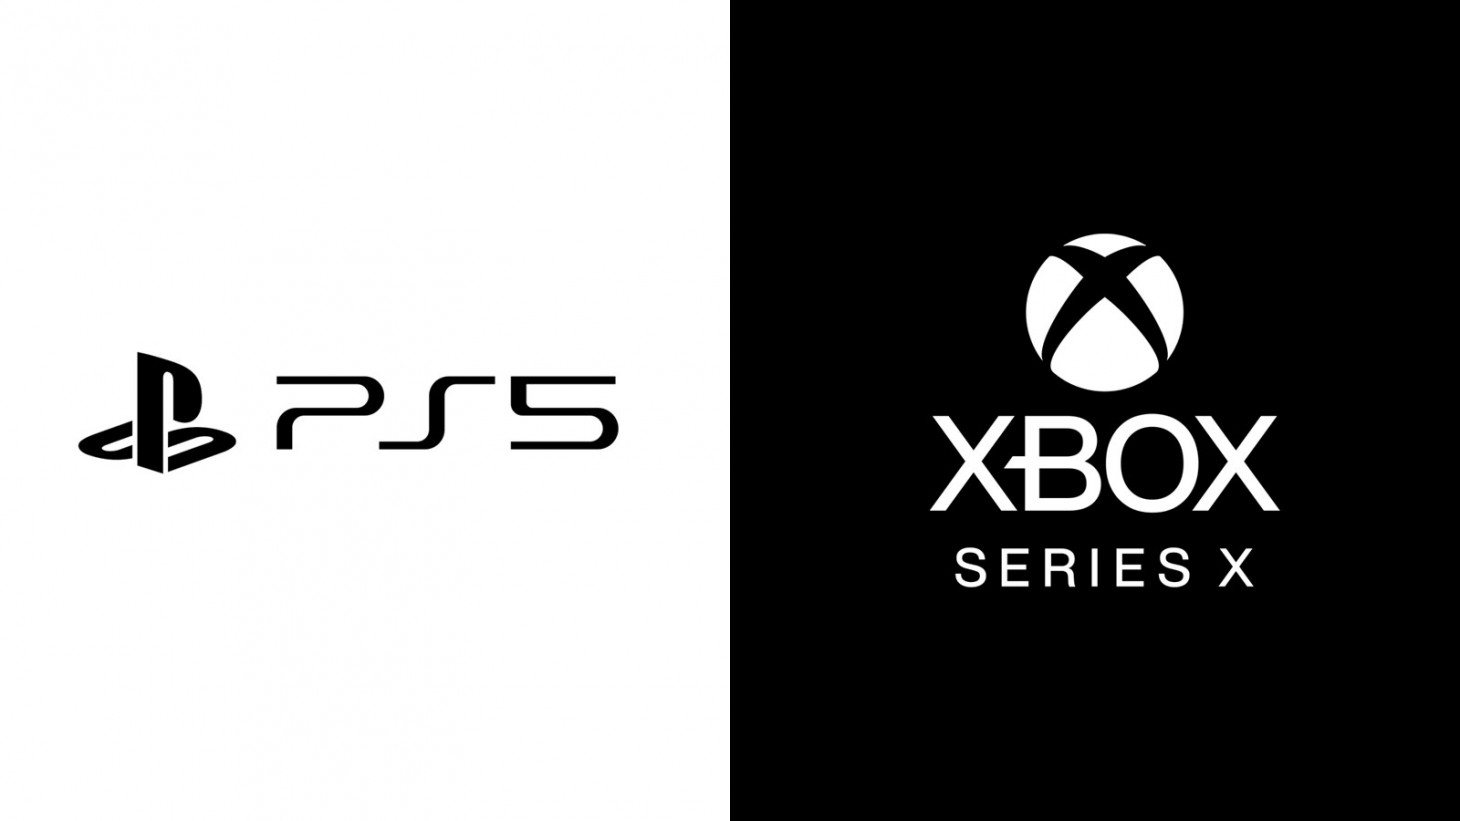 Ps5 vs xbox series X : r/playstation